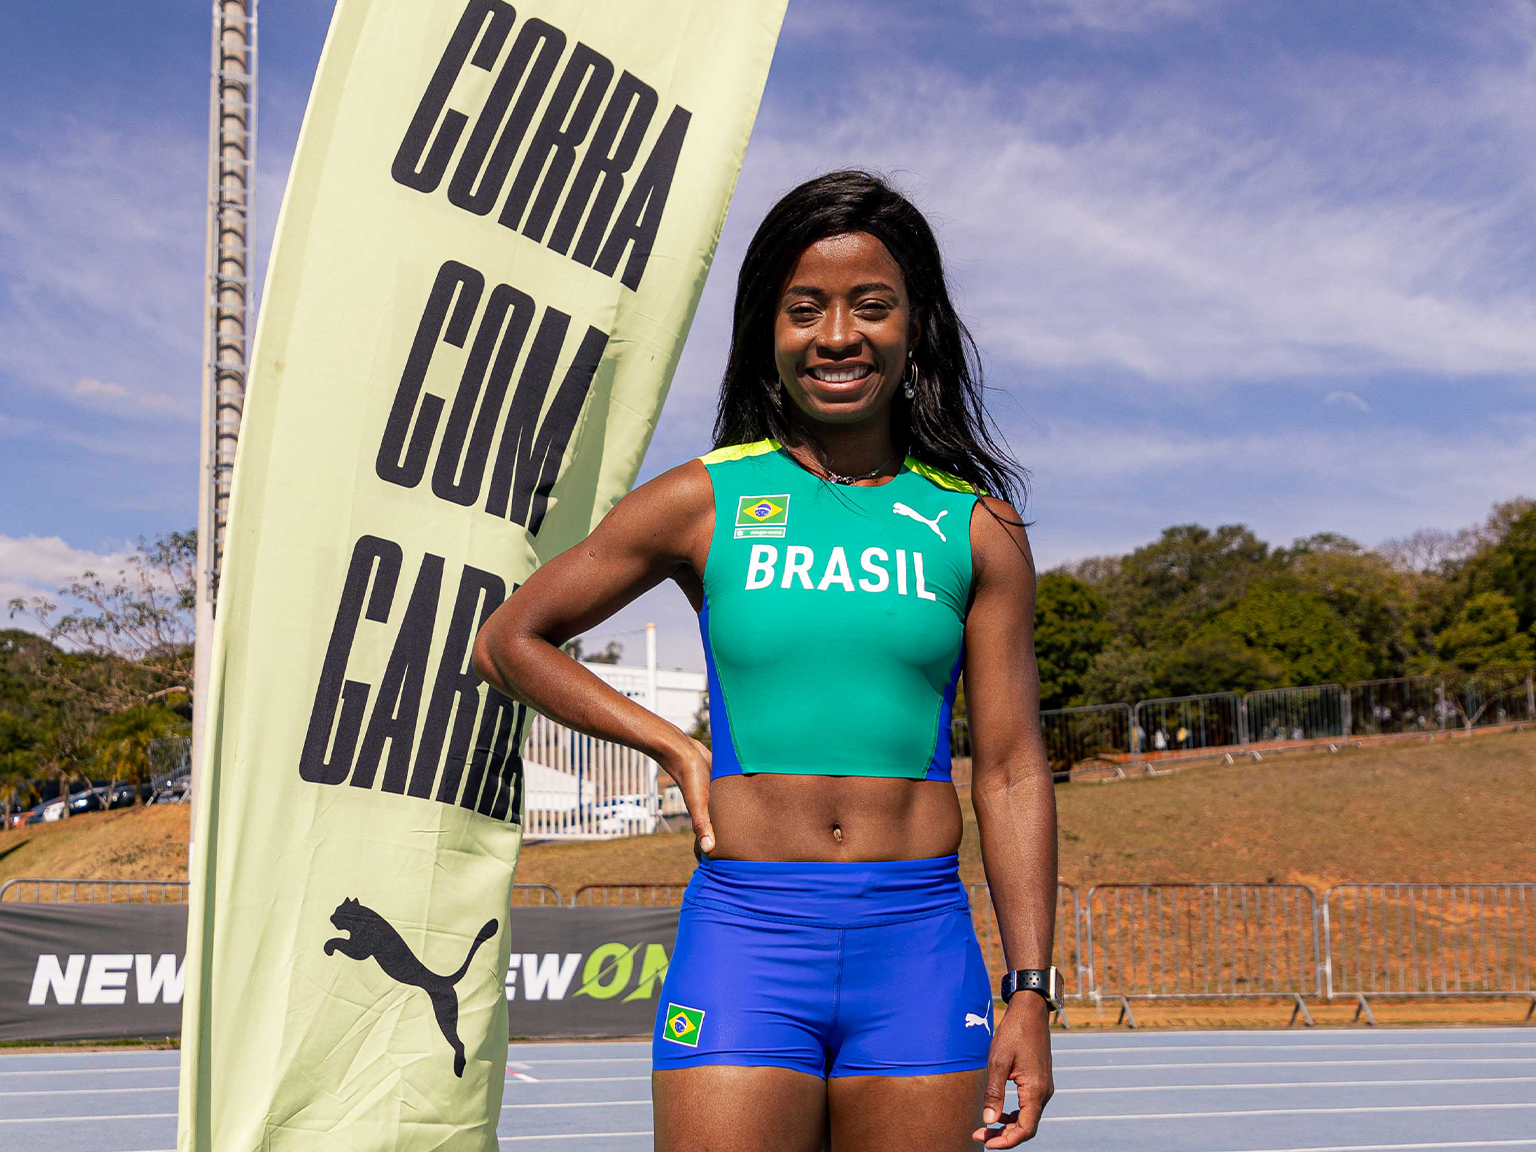 Sprinter Vitória Rosa is PUMA's new athlete and global ambassador